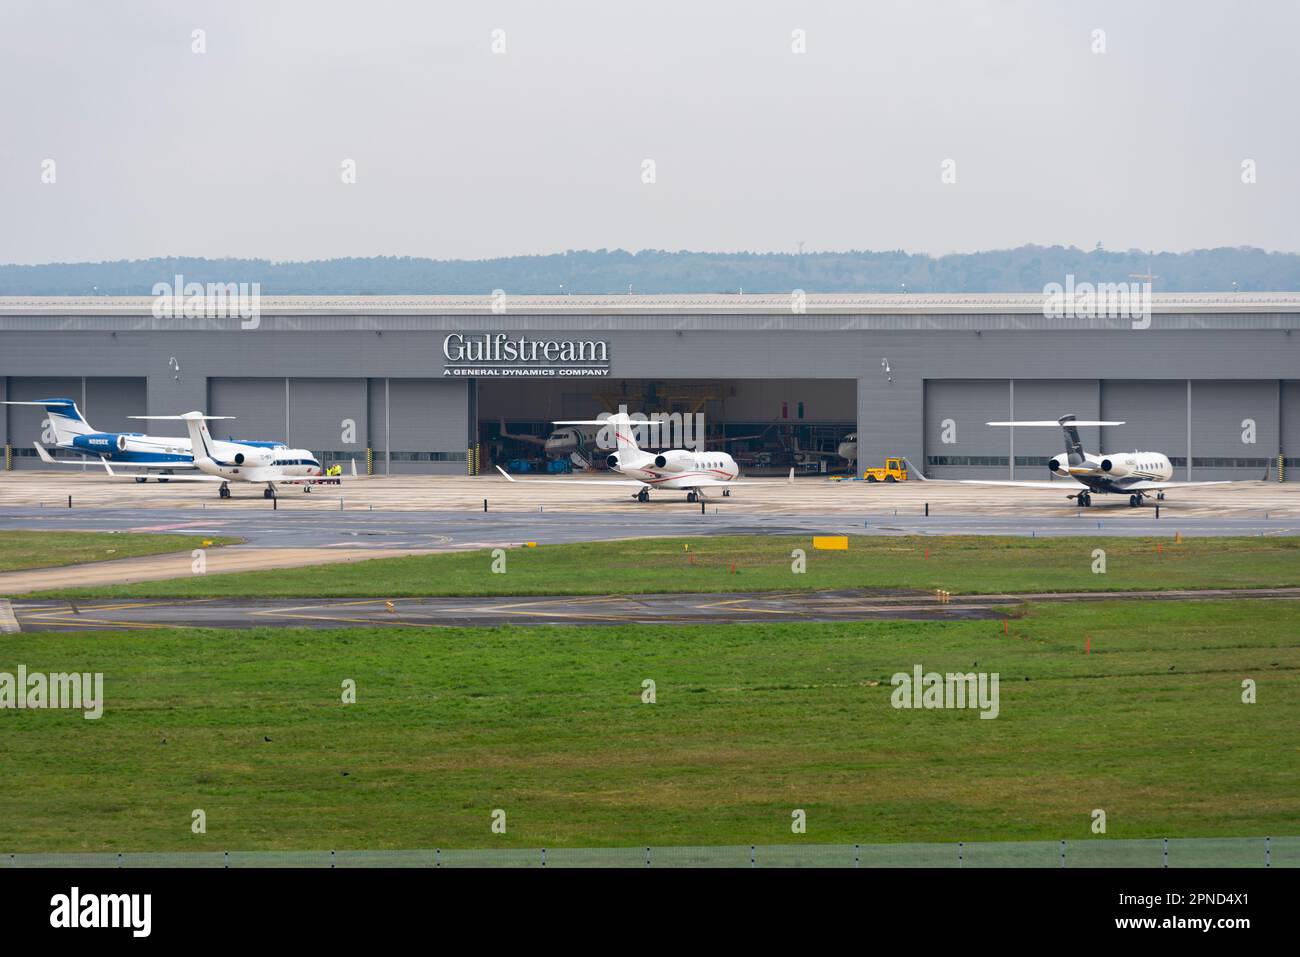 Gulfstream MRO hangar, Farnborough Airport, Hampshire, UK. Private jets parked outside. Maintenance, repair and operations hangar by VolkerFitzpatrick Stock Photo